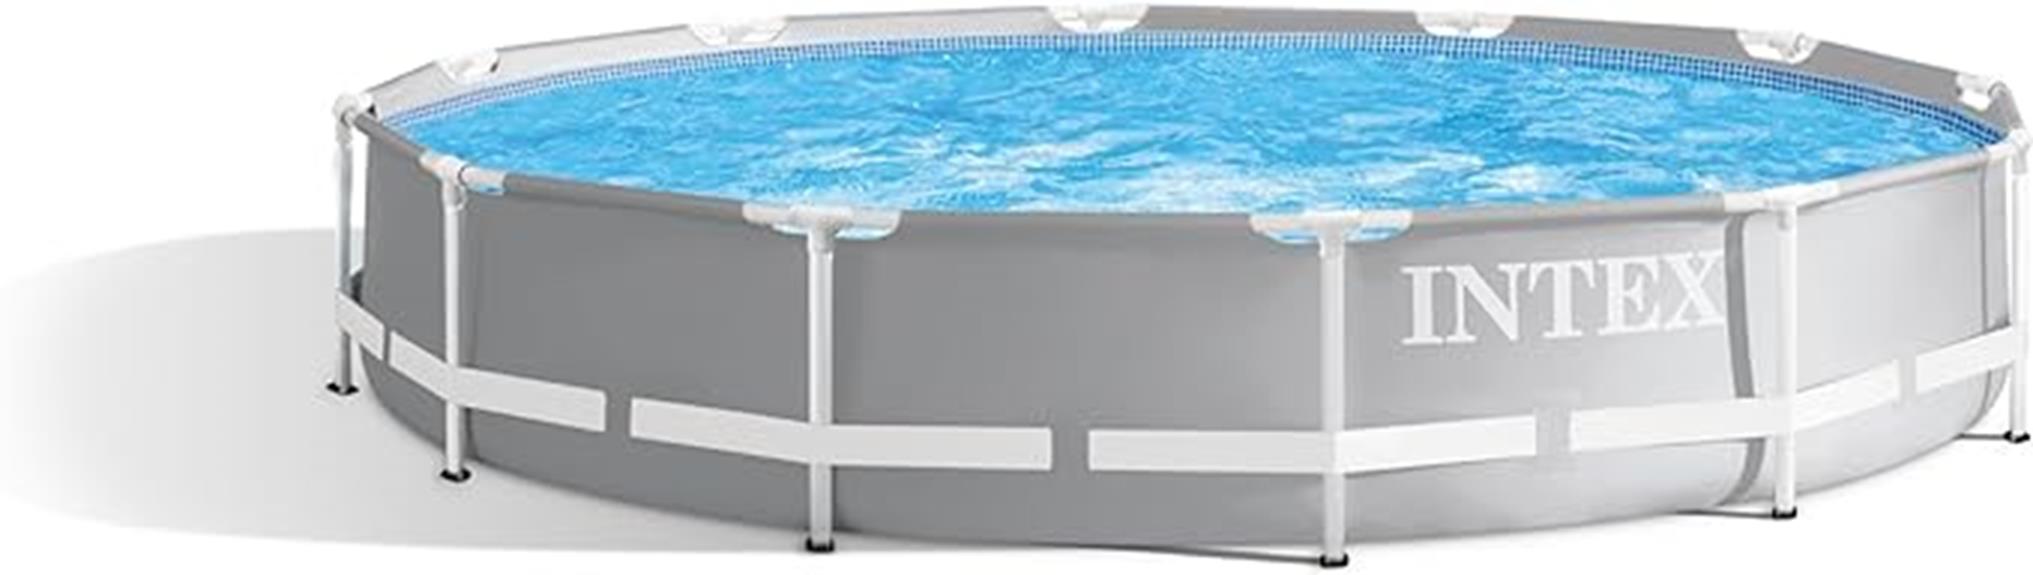 durable spacious premium pool